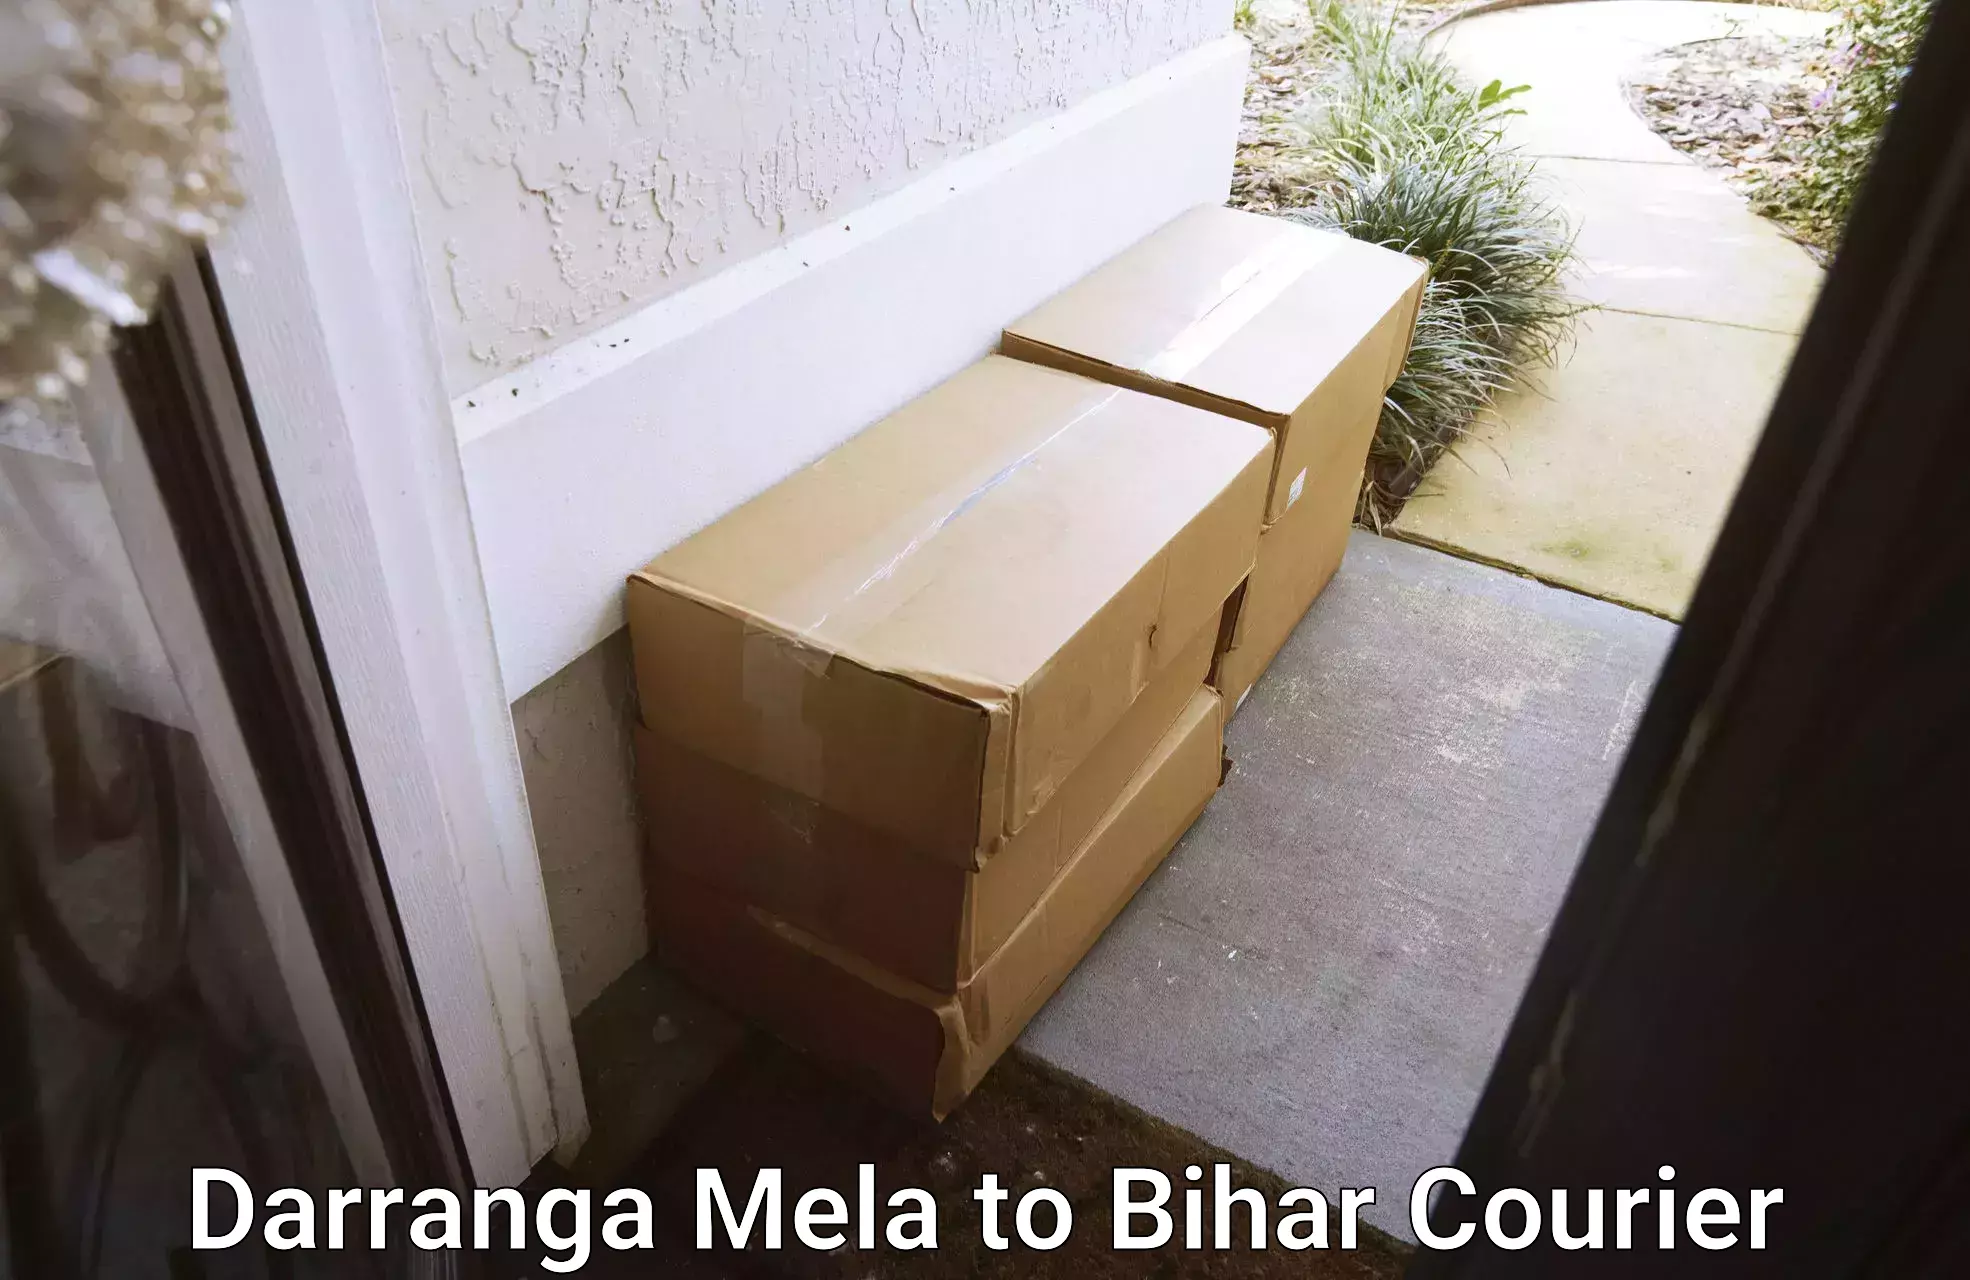 Multi-national courier services Darranga Mela to Bhojpur